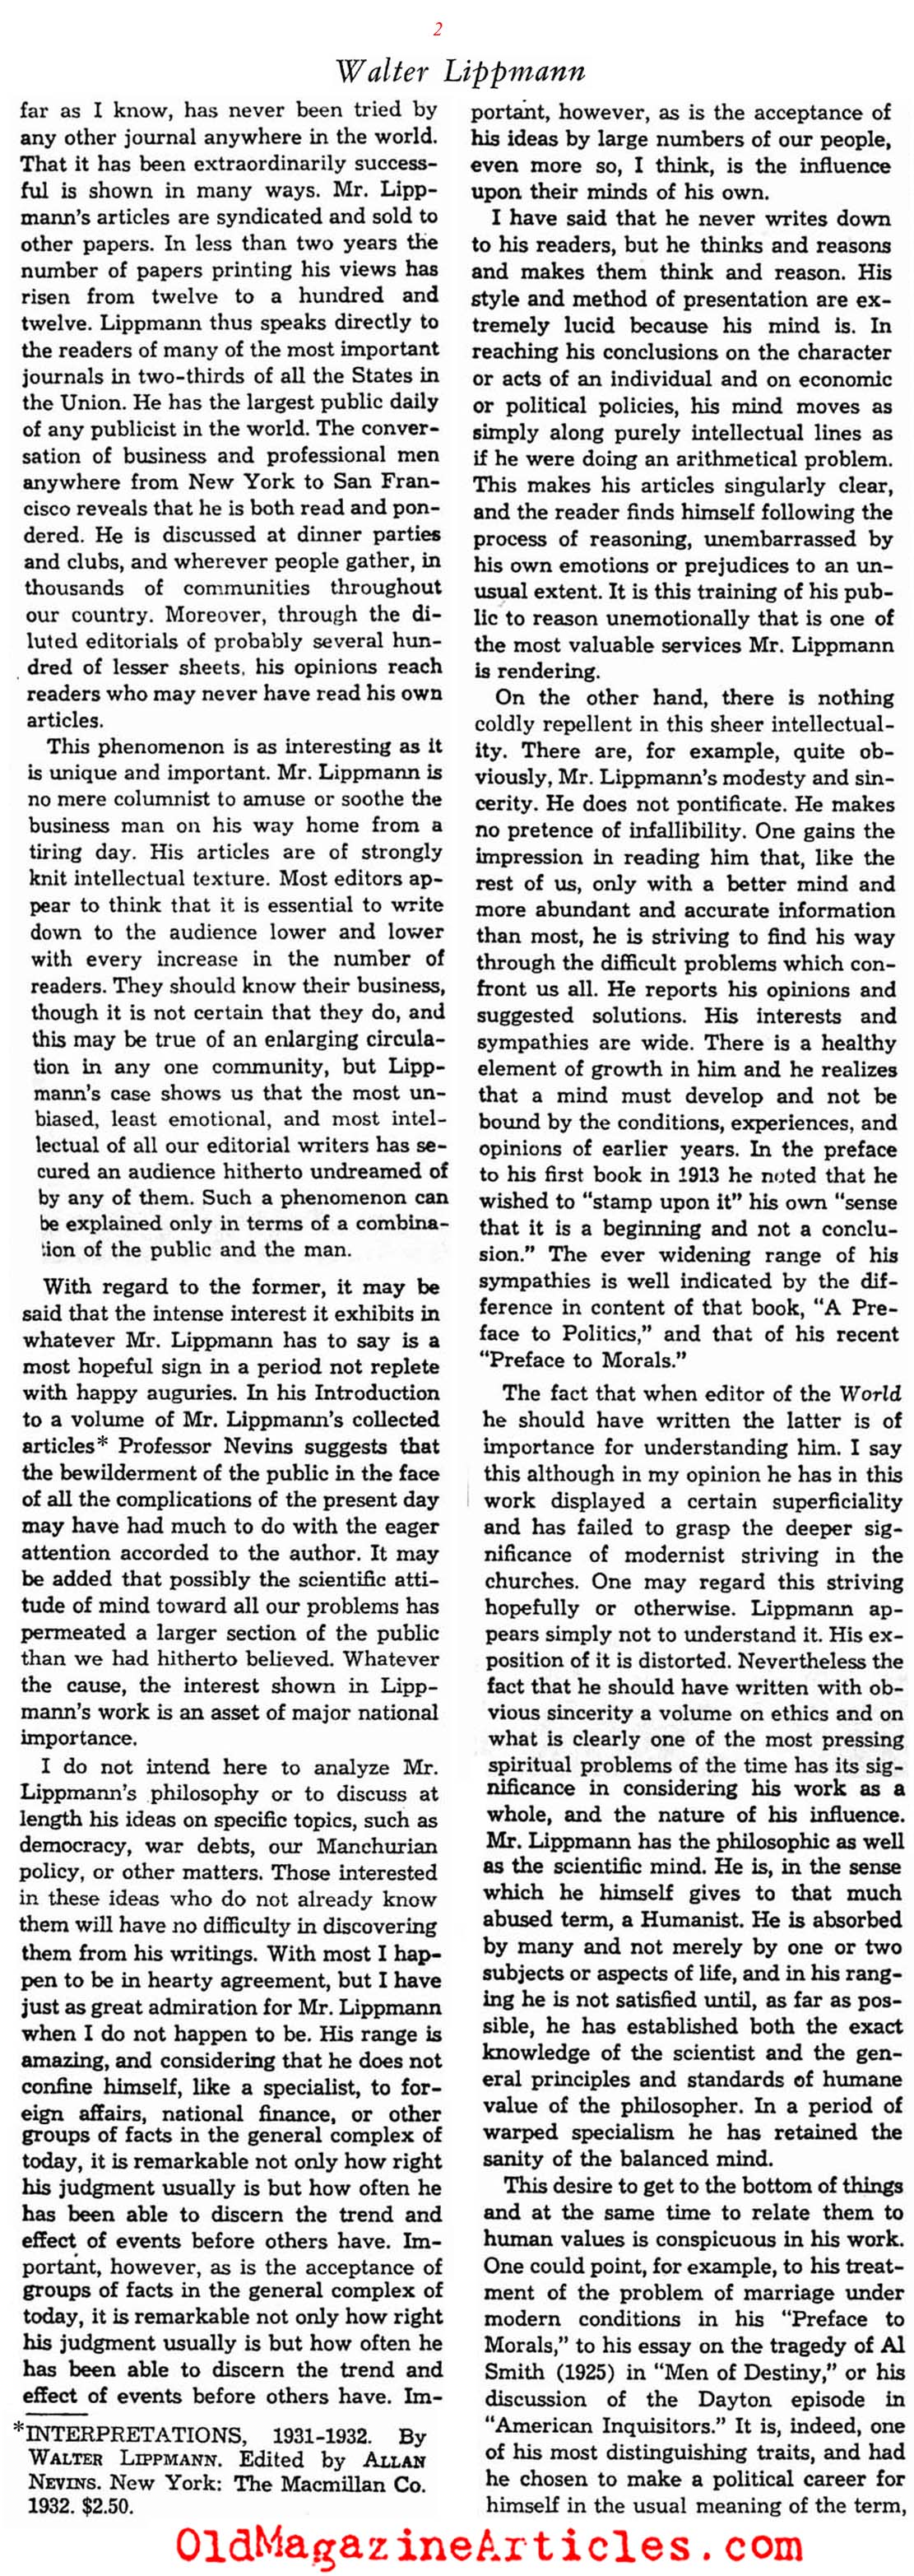  Walter Lippmann: Columnist (Saturday Review of Literature, 1933)